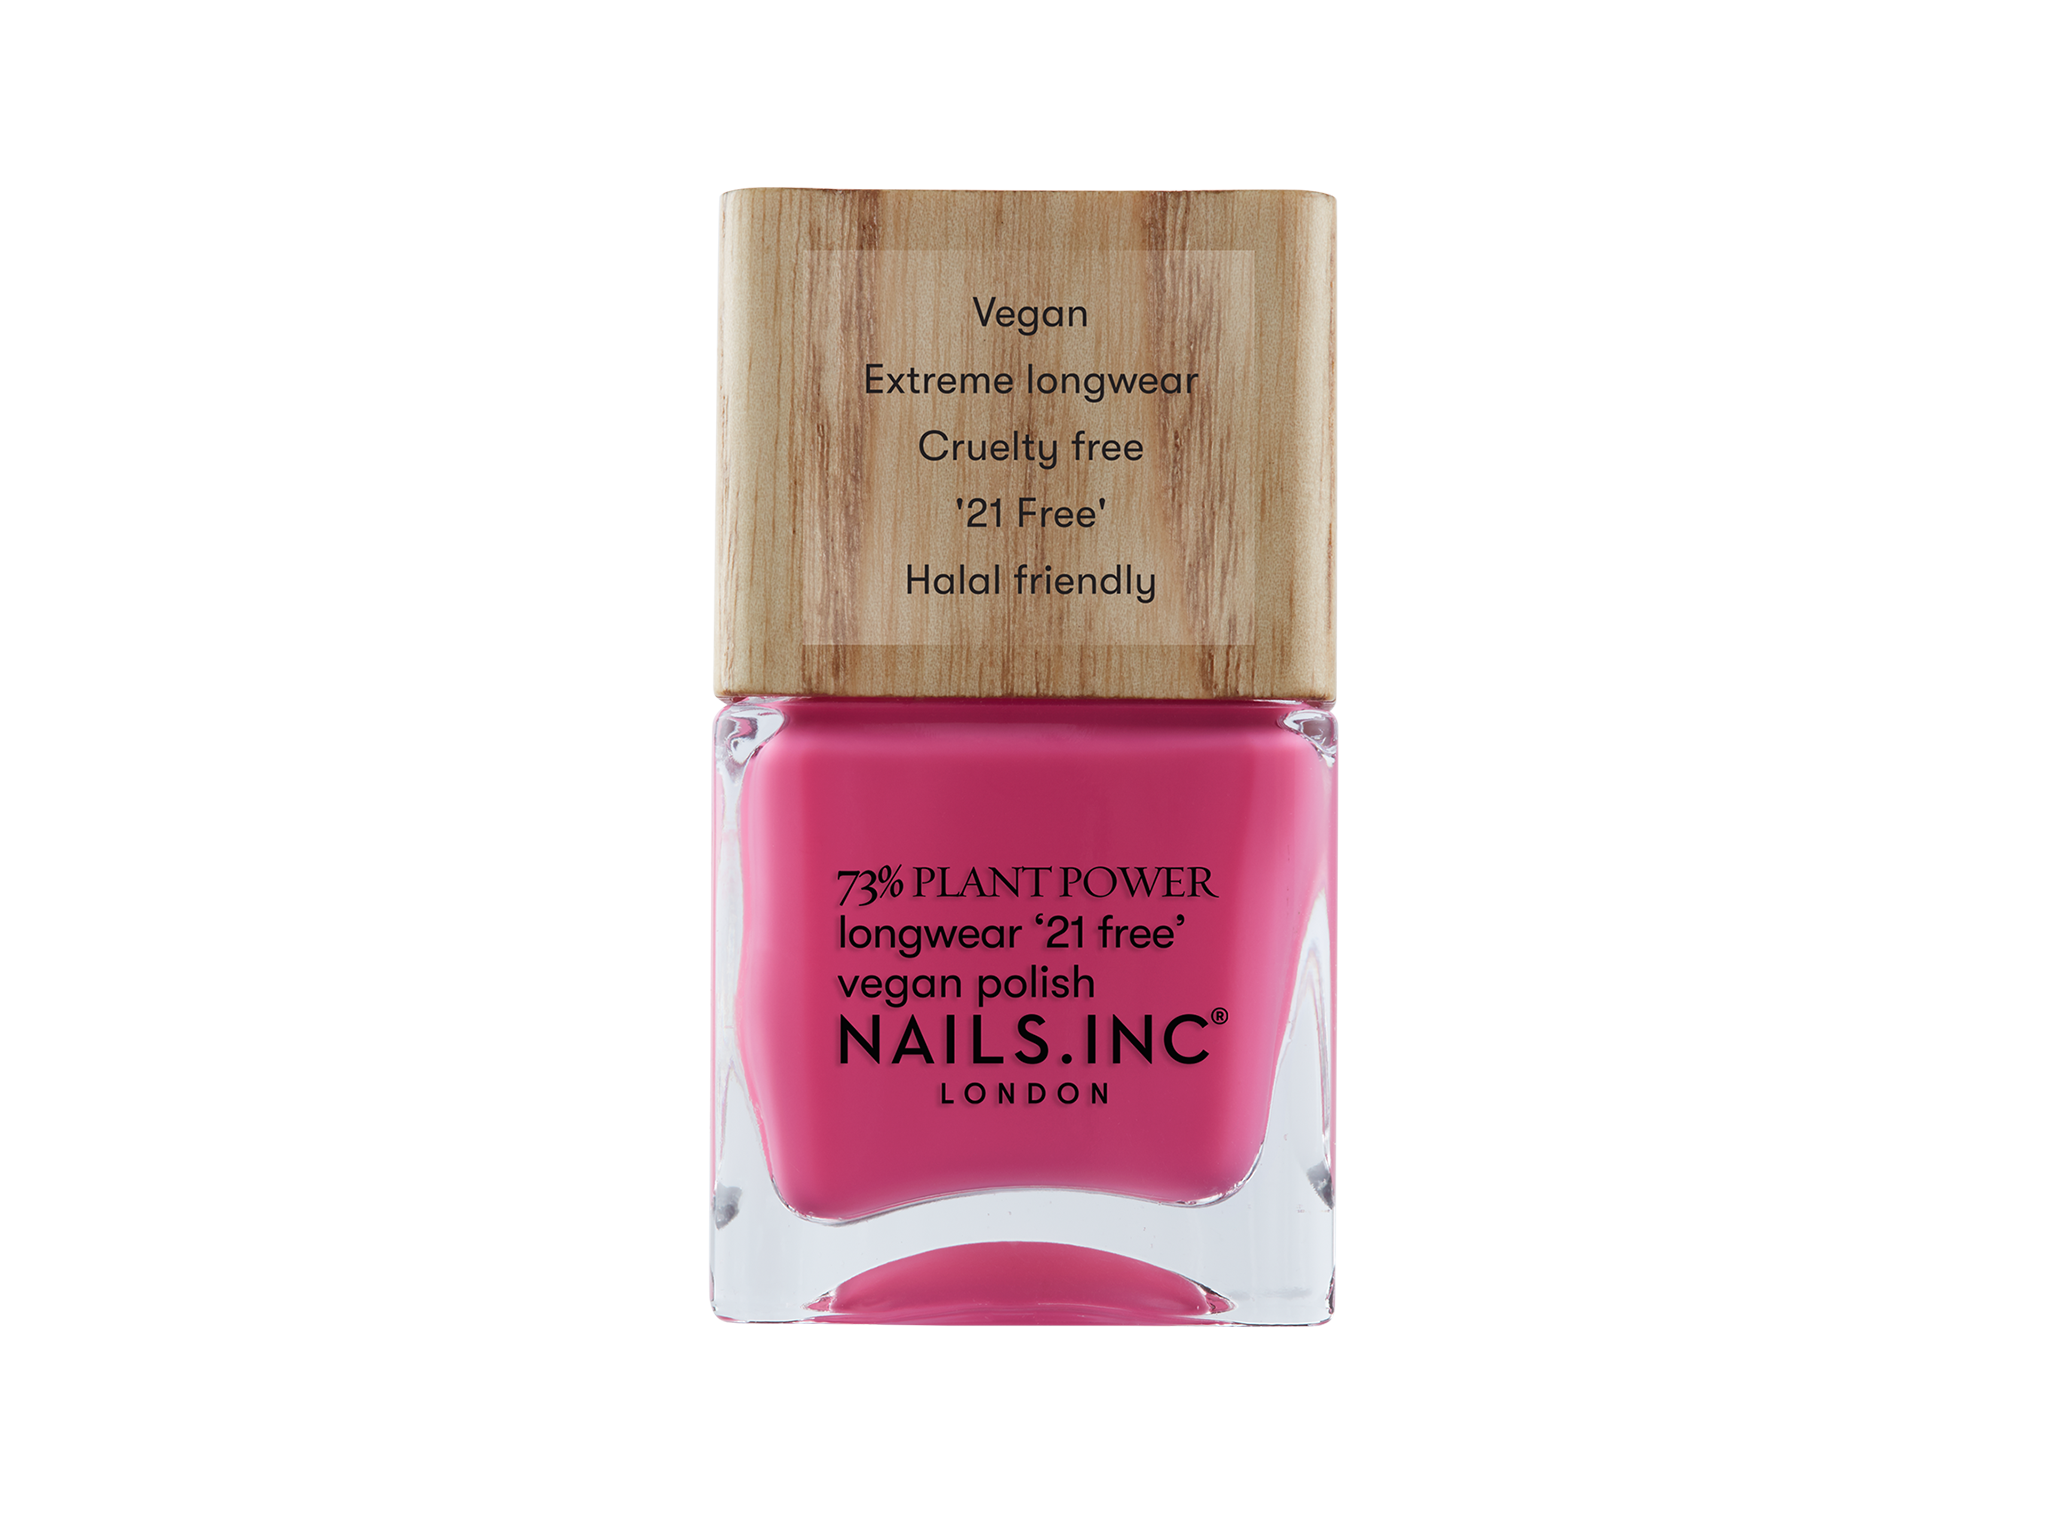 Nails. Inc plant based vegan nail polish in u ok hun? indybest